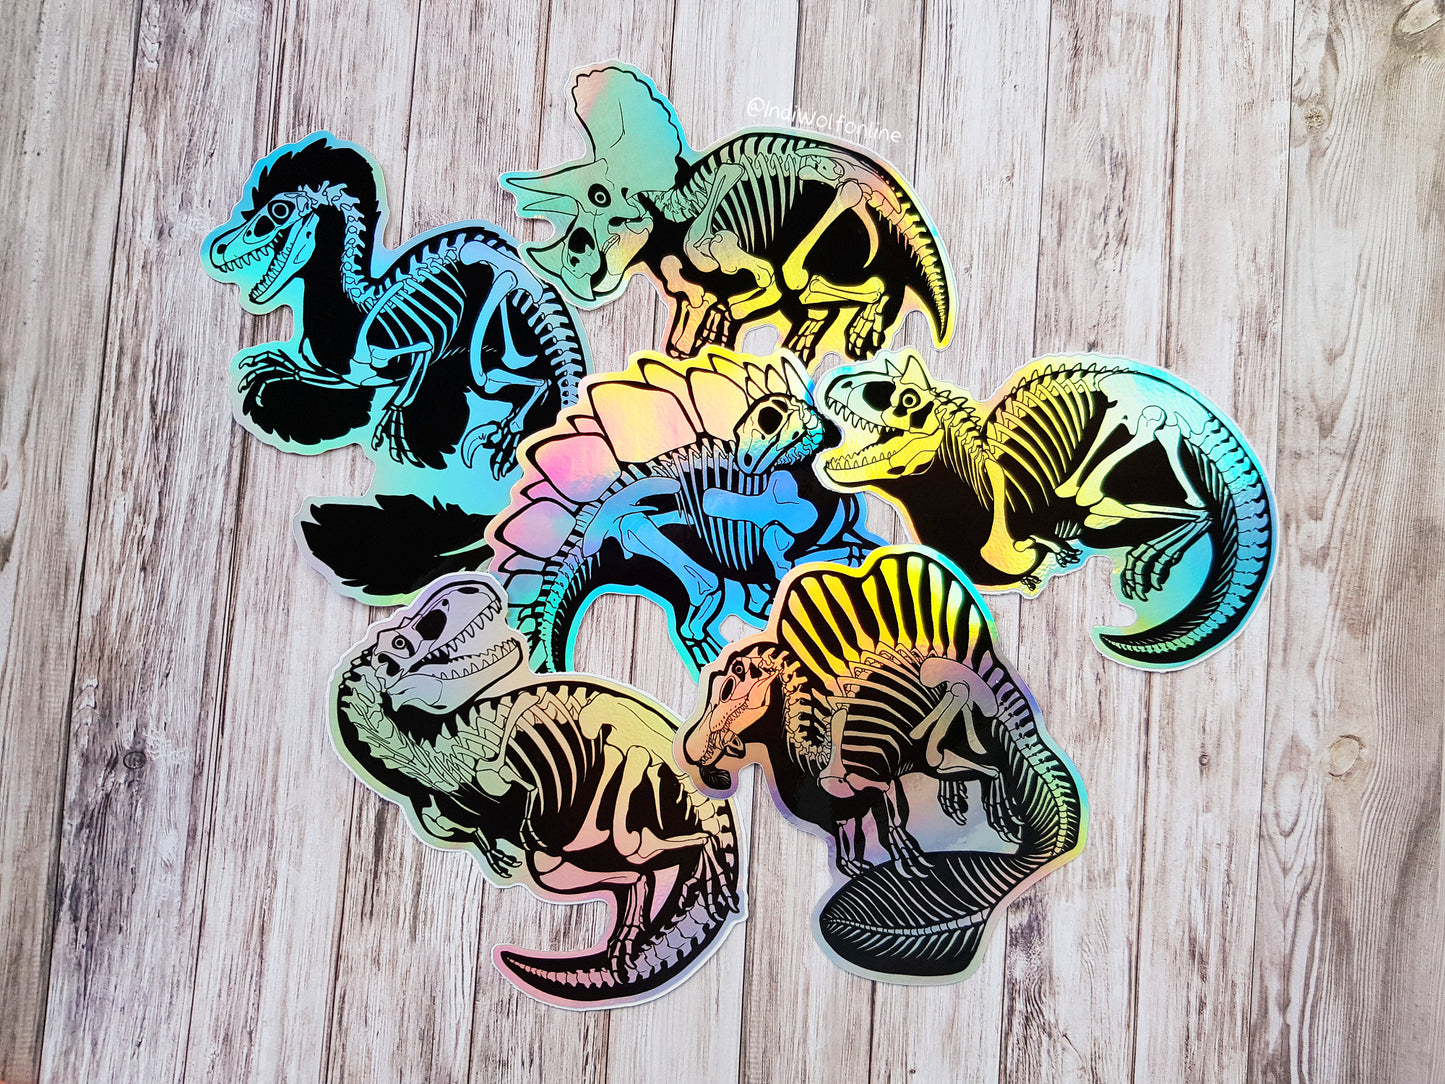 Triceratops Skeleton - Holographic Vinyl Sticker